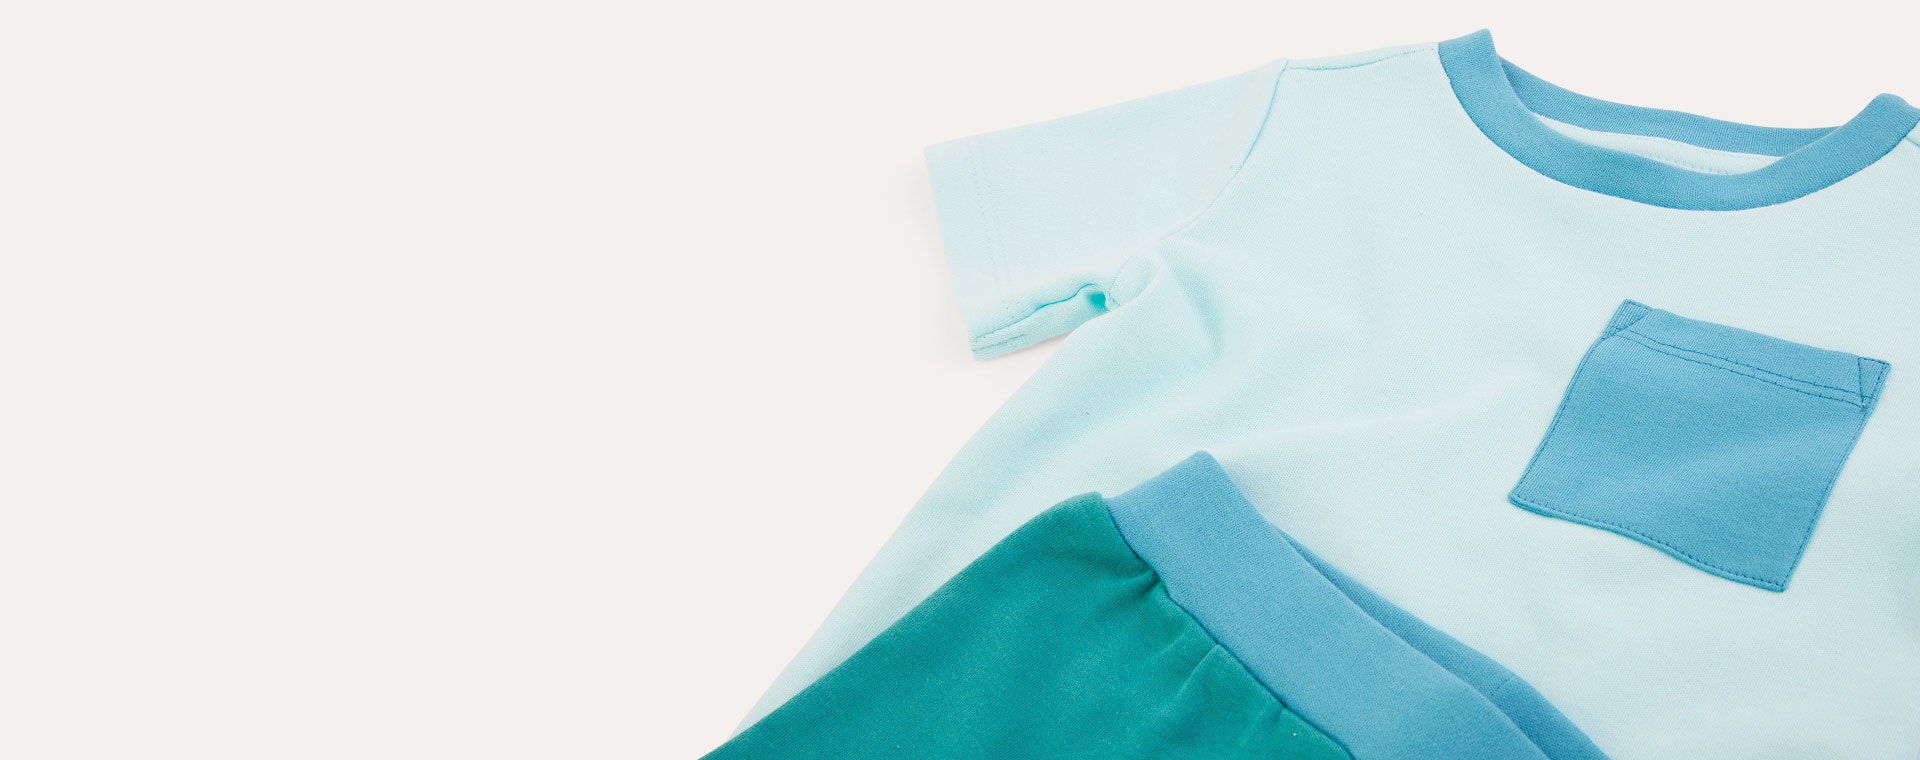 Aqua Tonal KIDLY Label Organic Short Sleeve Pyjamas